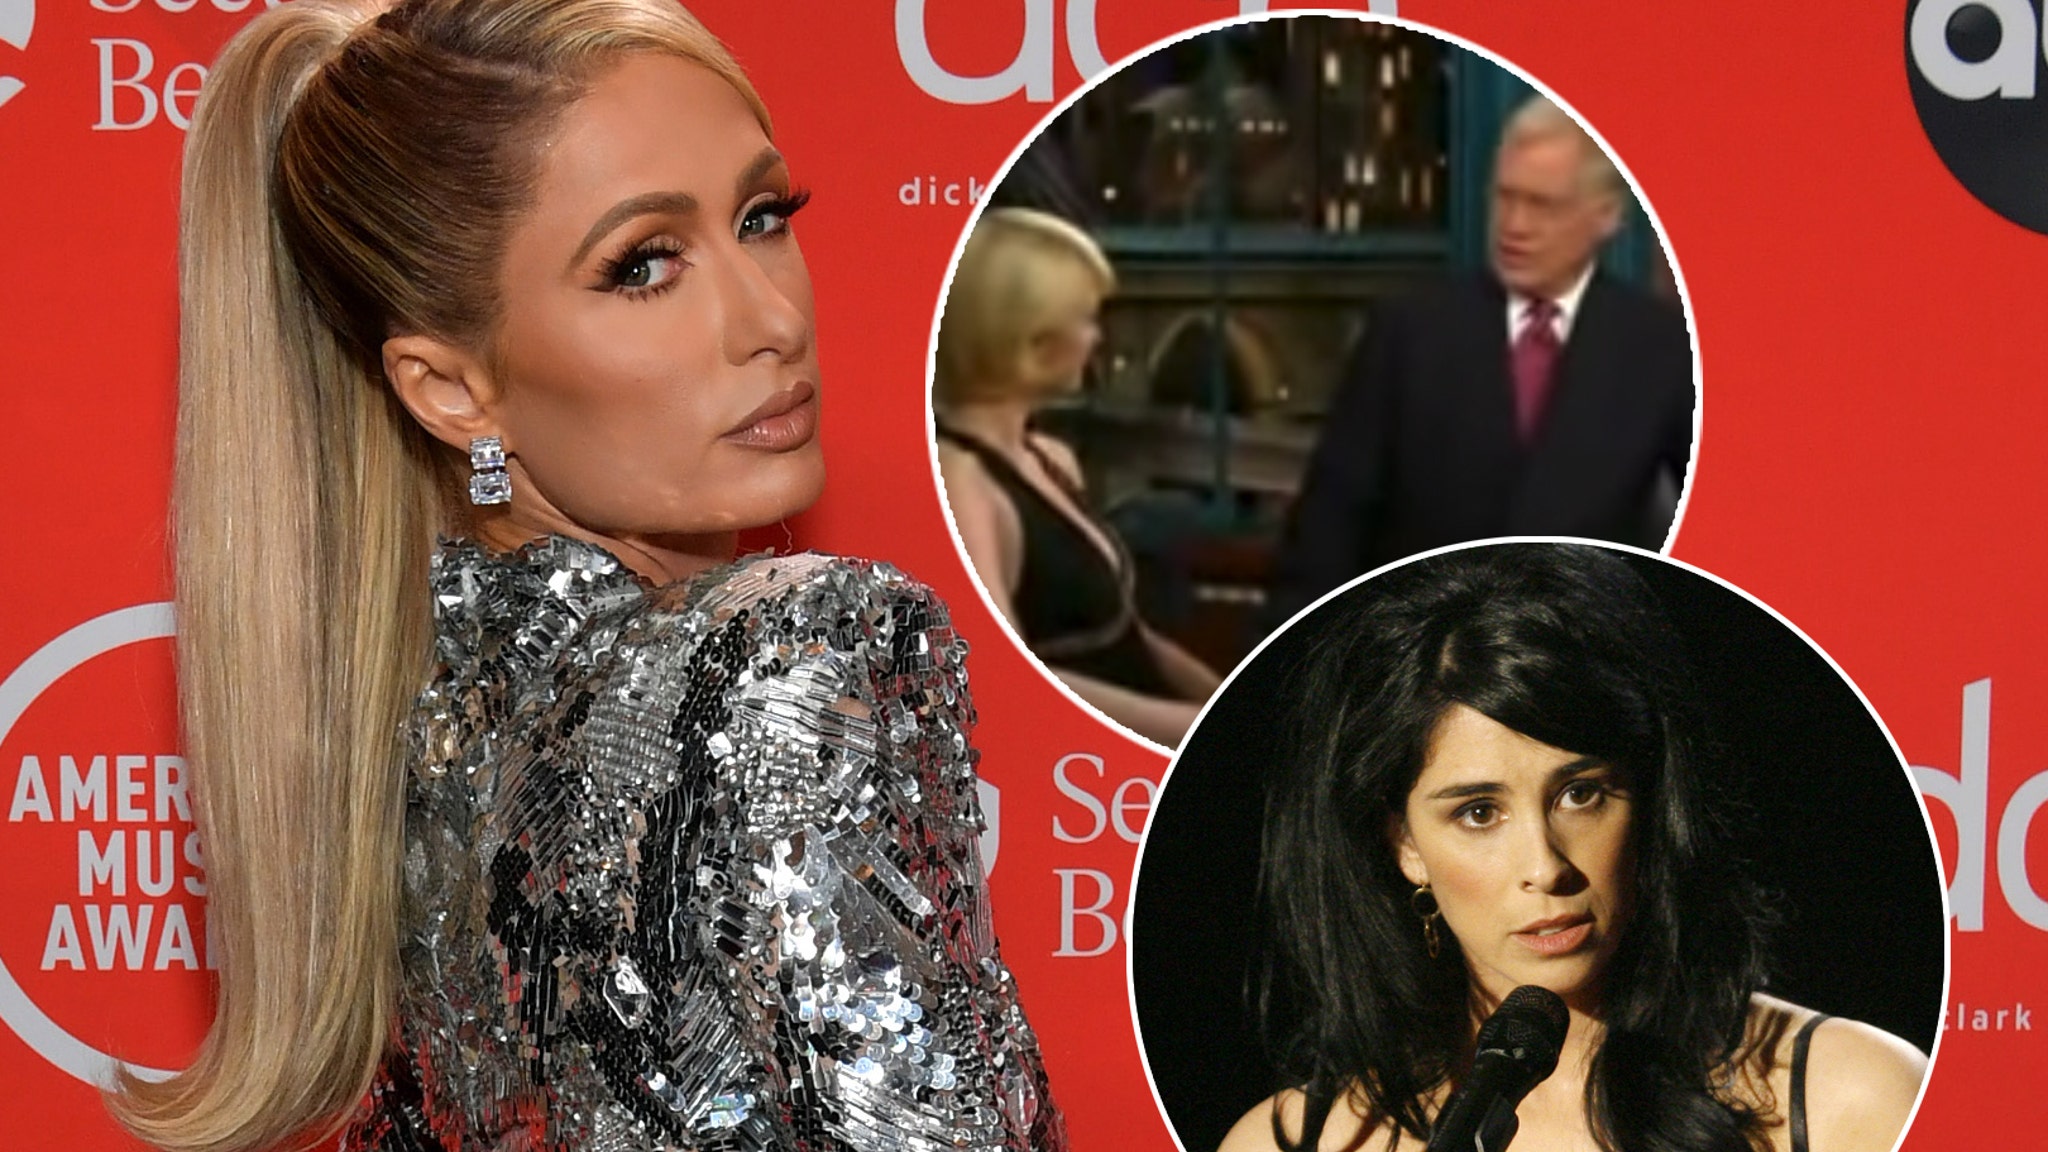 Paris Hilton recalls “cruel” treatment by David Letterman, Sarah Silverman